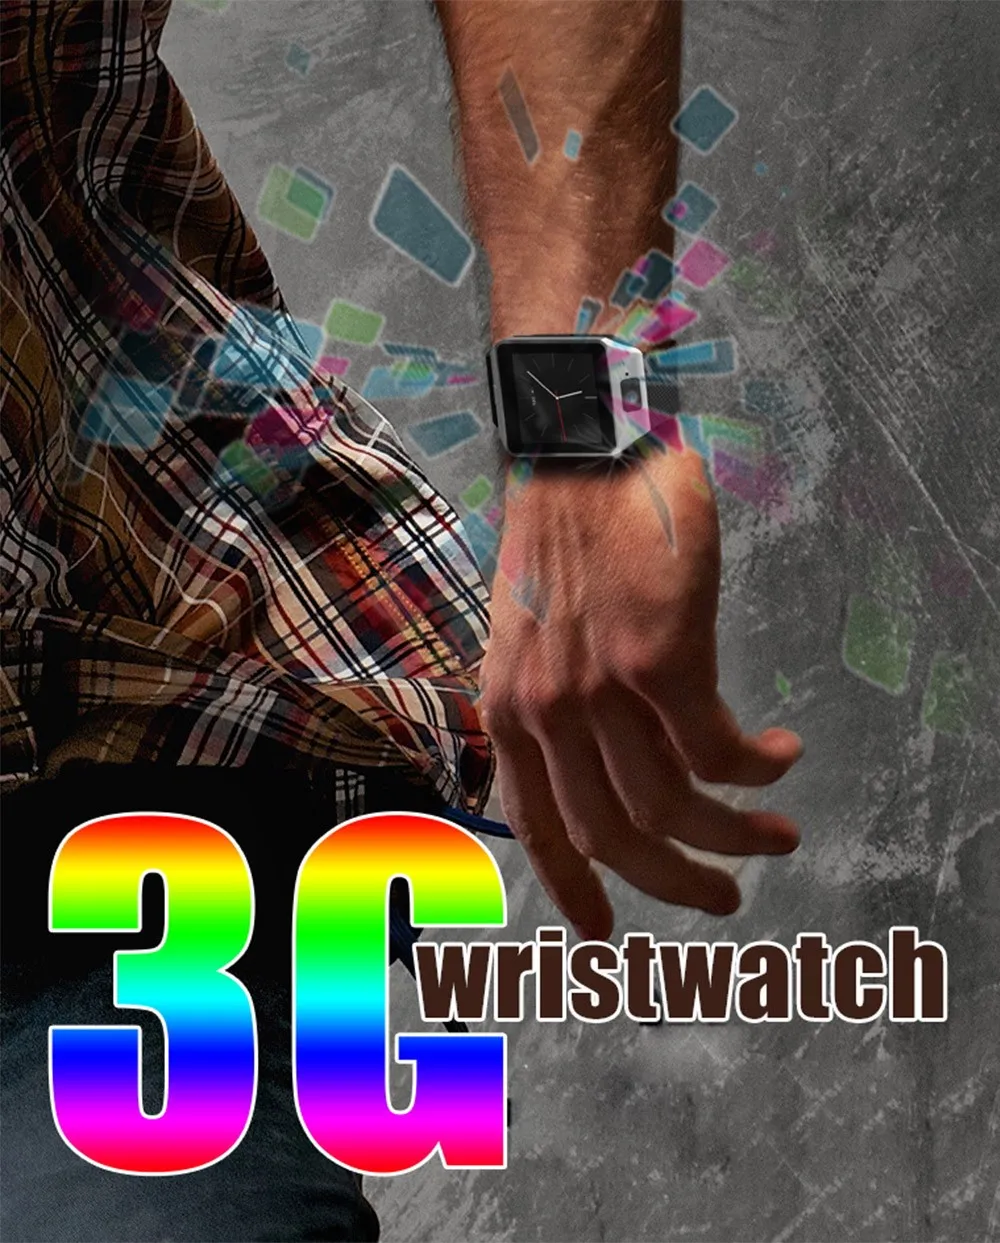 QW09 Смарт-часы Android 4,4 MTK6572 2MP 3g wifi двухъядерный 512 МБ ram 4 Гб rom Bluetooth Smartwatch для IOS Android PK DZ09 GT08